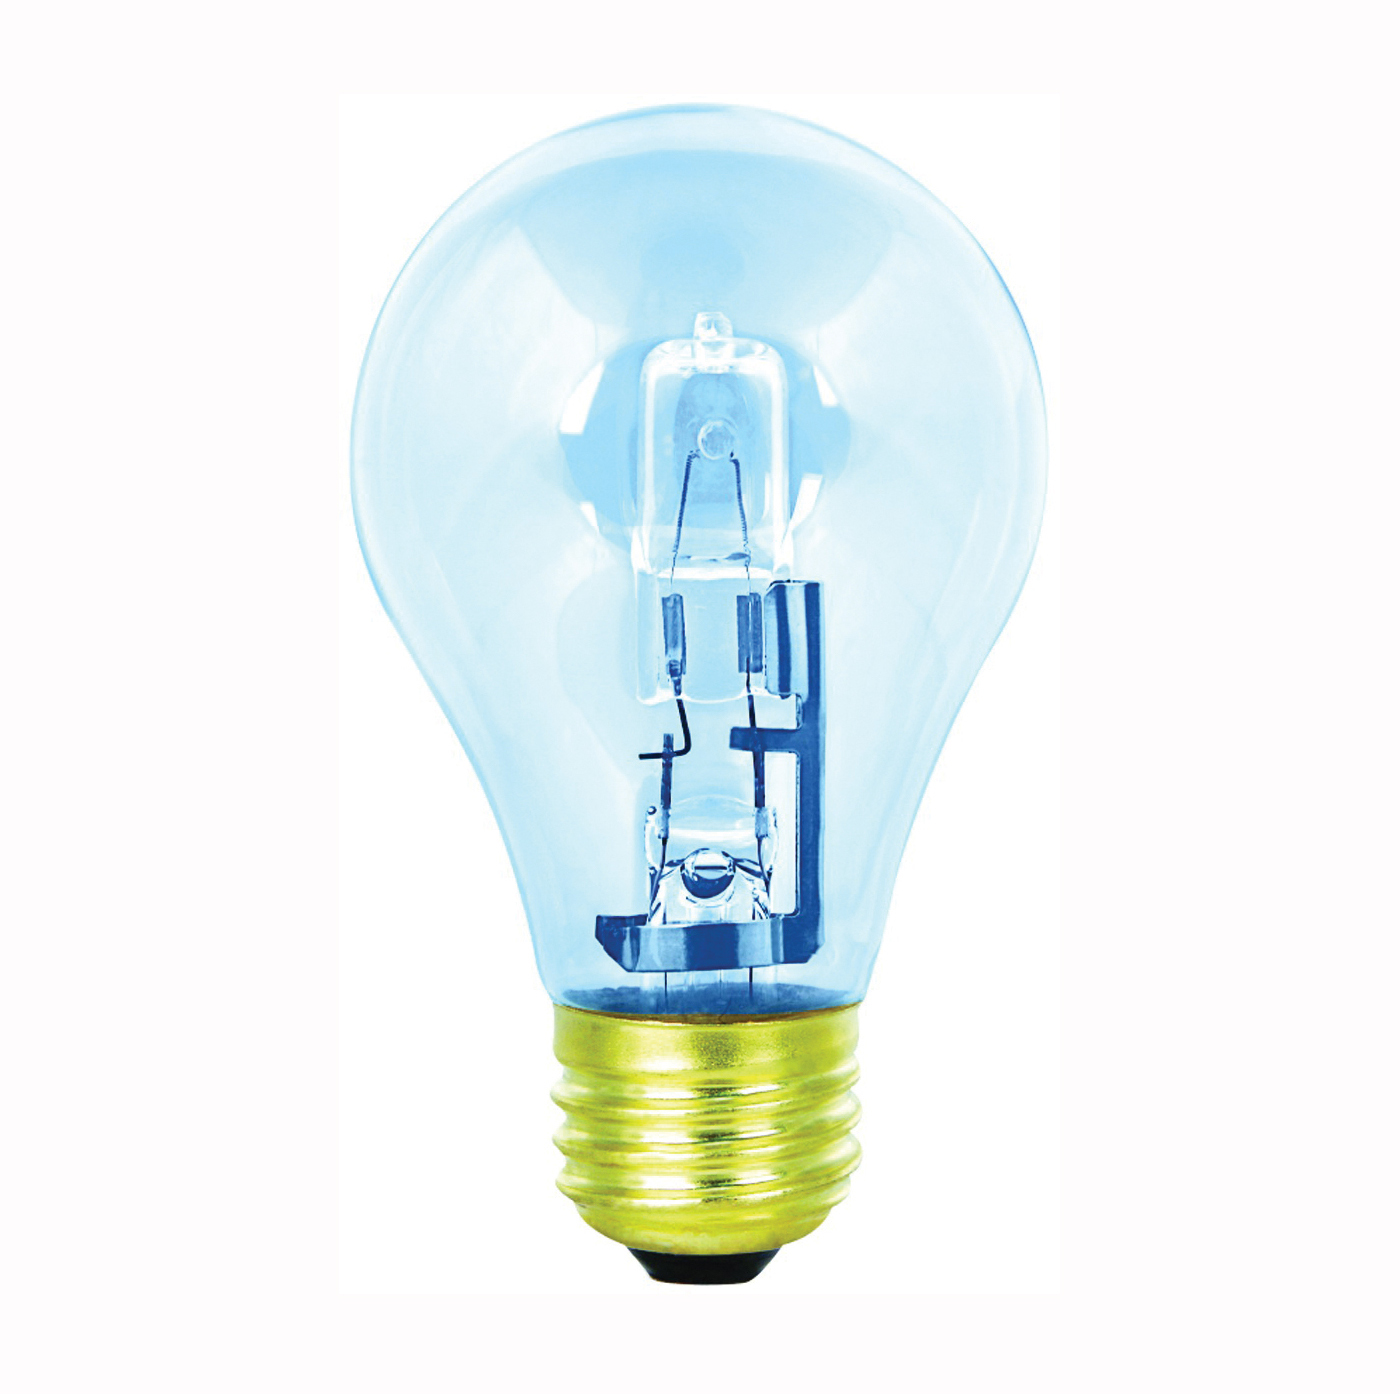 Q72A/CL/D/2 Halogen Bulb, 72 W, Medium E26 Lamp Base, A19 Lamp, Soft White Light, 1120 Lumens